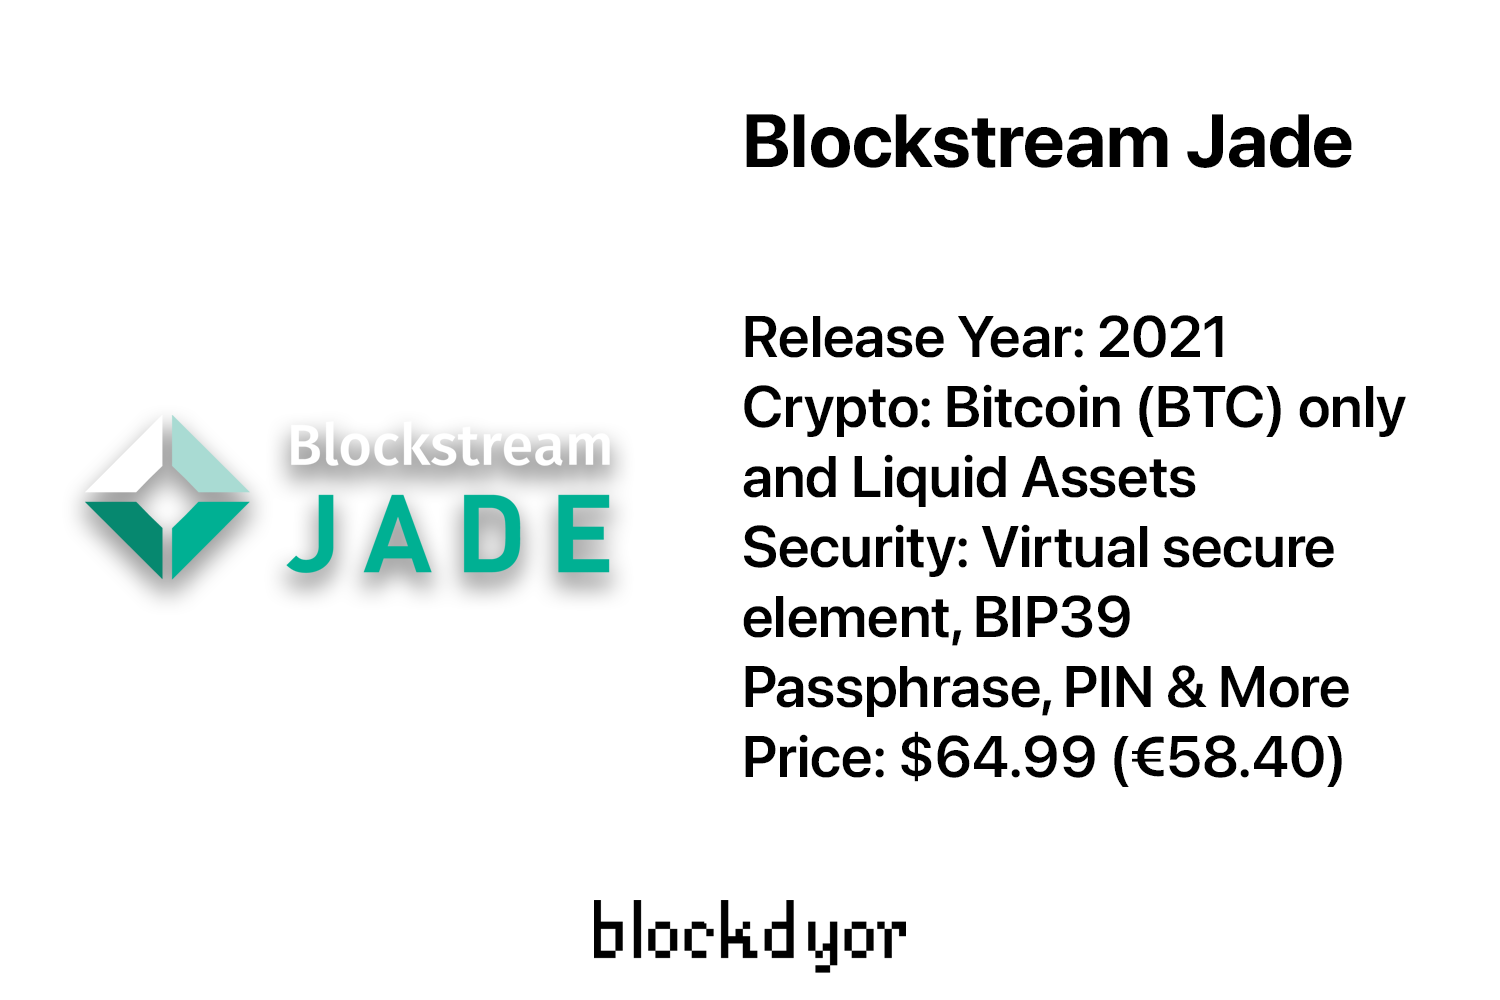 Blockstream Jade Overview